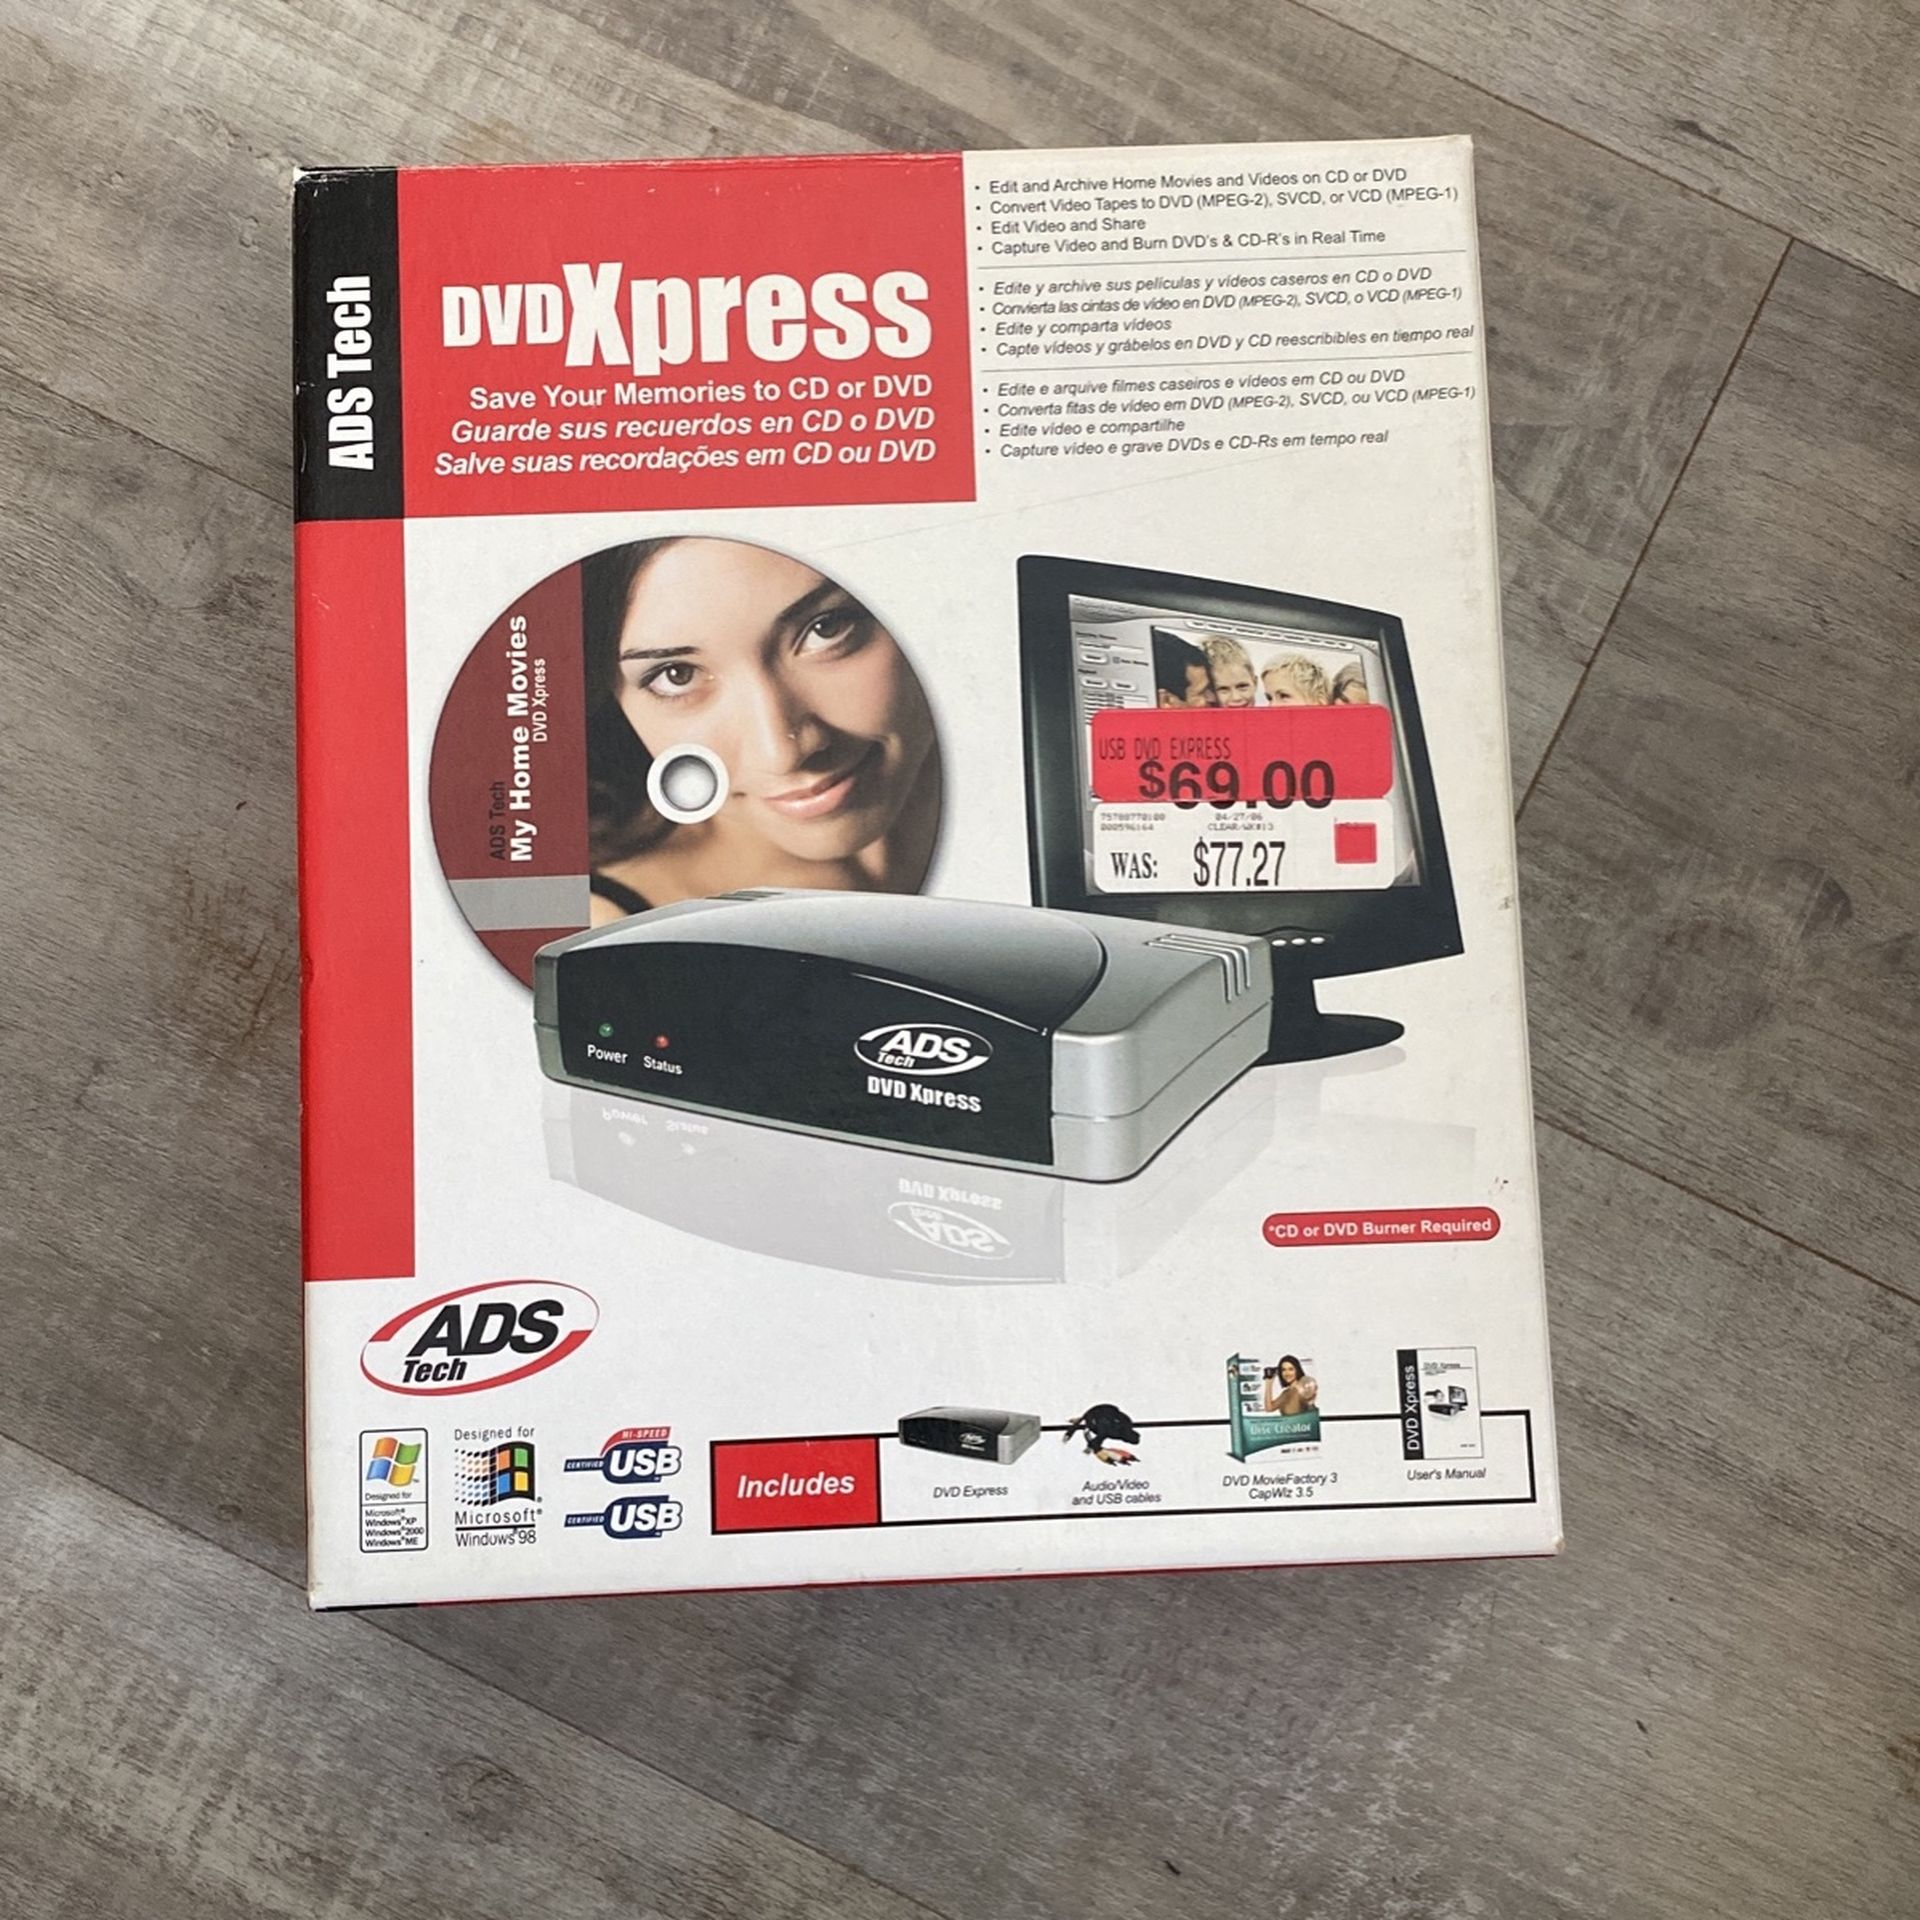 DVD Express Video Editor